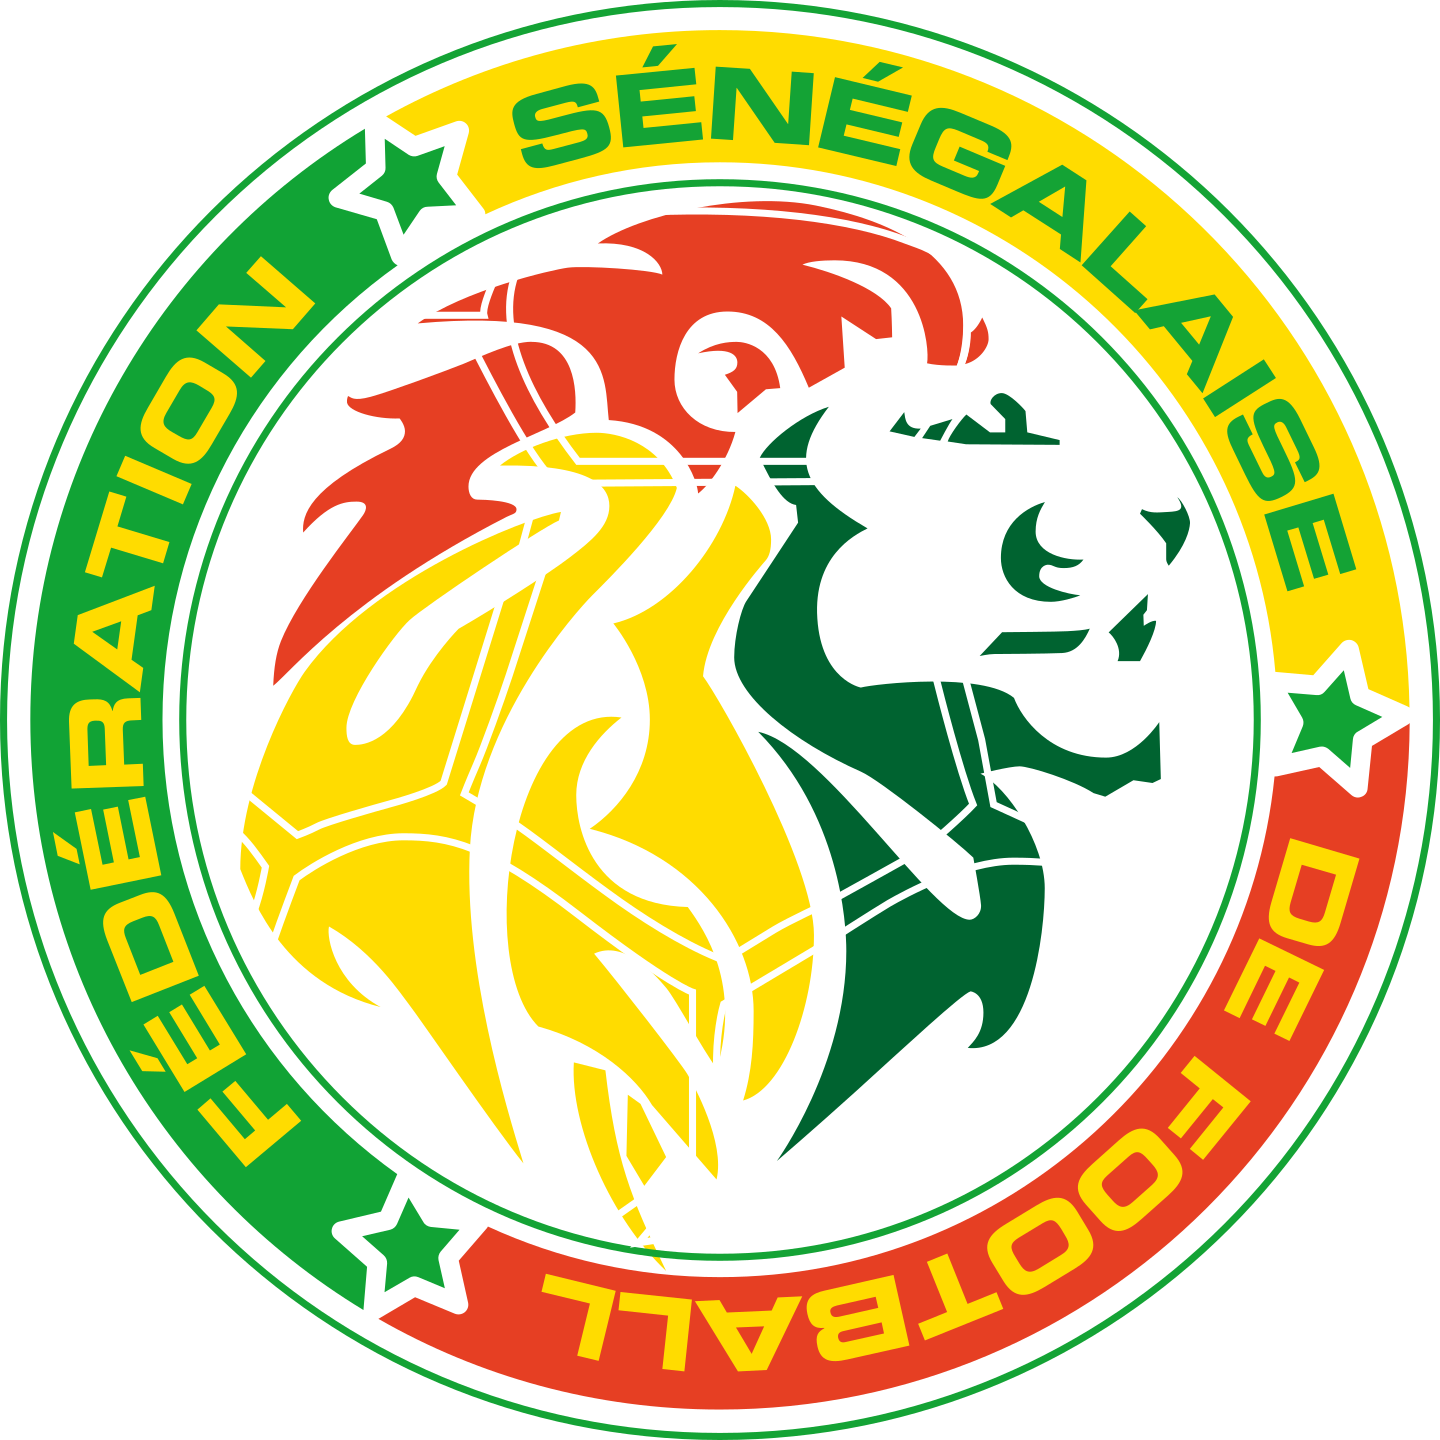 fsf senegal national football team logo 2 - FSF Logo - Senegal National Football Team Logo